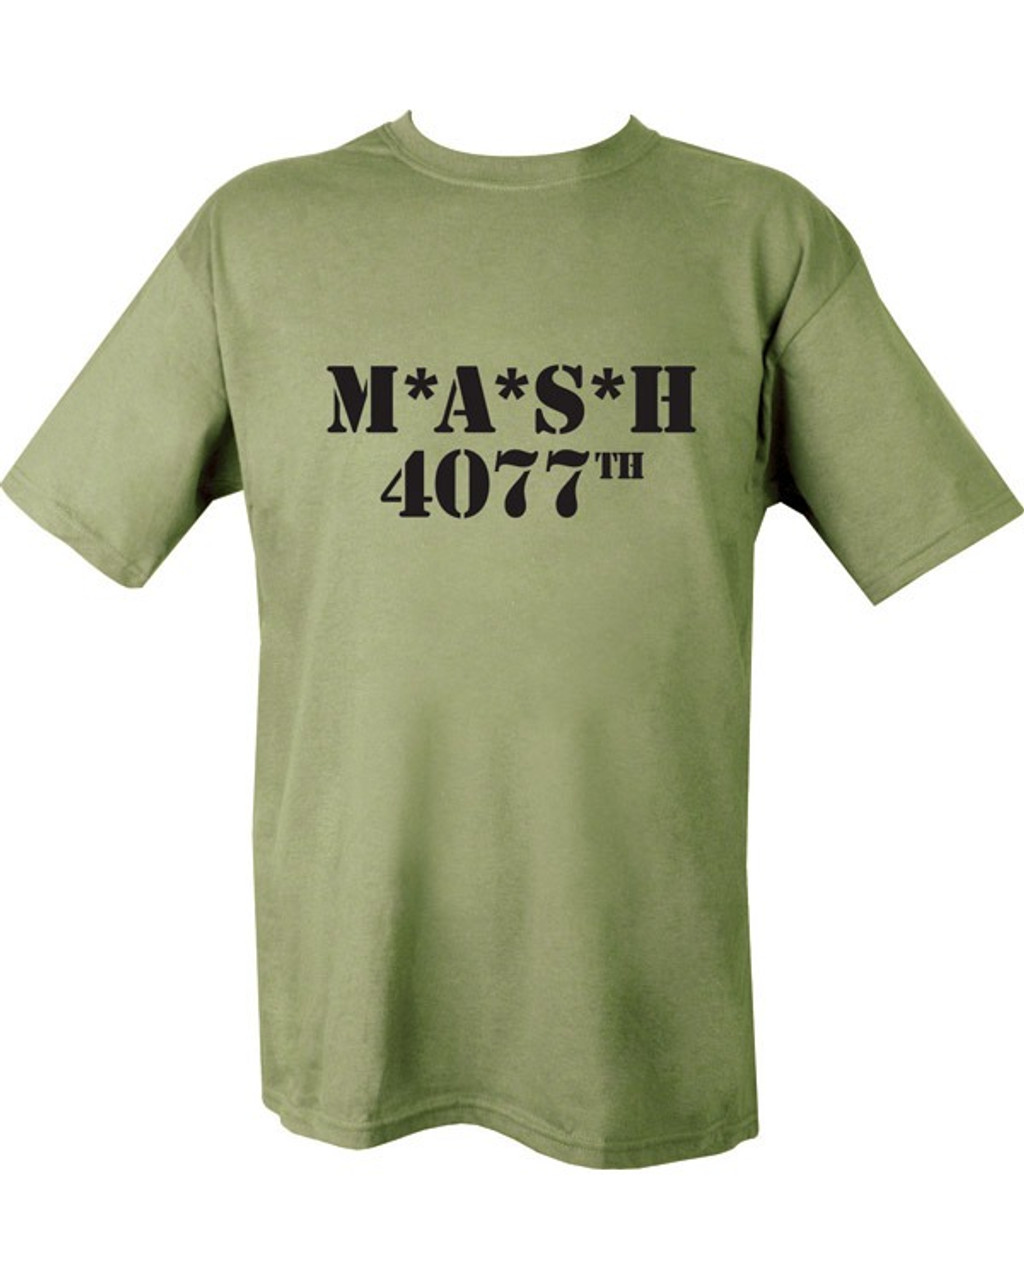 MASH 4077th T shirt - bbgunsuk.co.uk